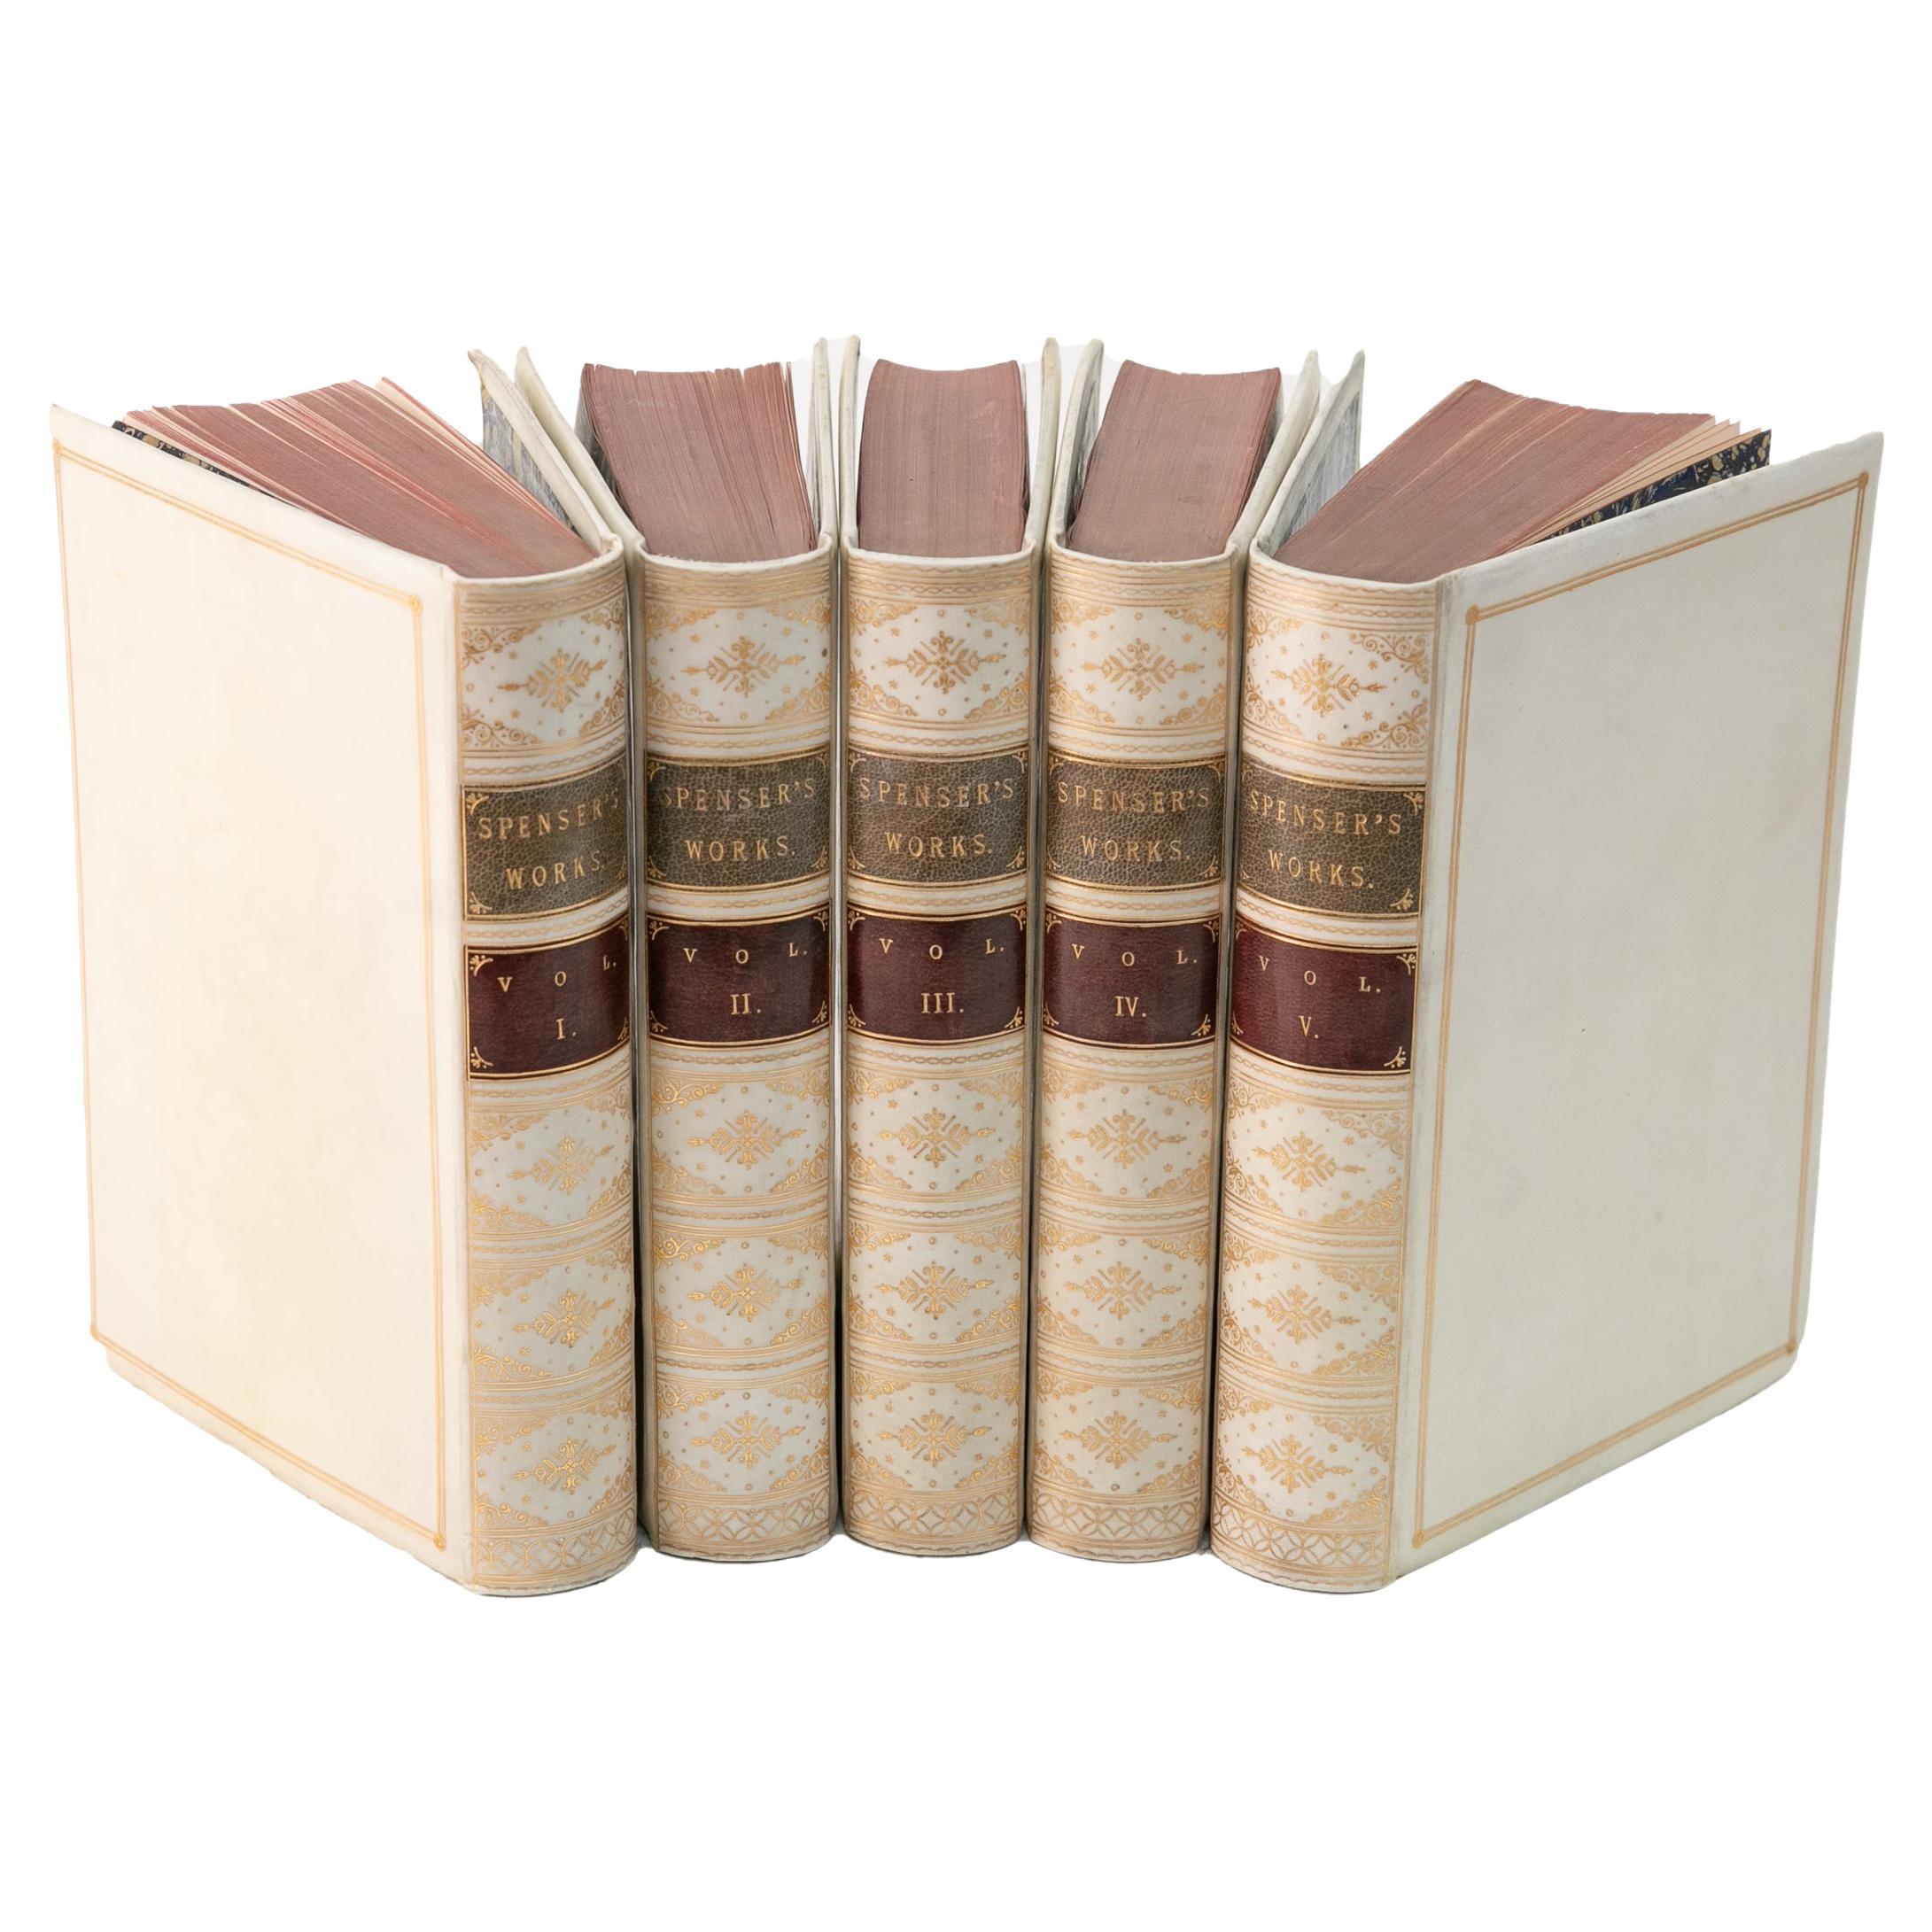 5 Volumes. Edmund Spenser, The Works. For Sale